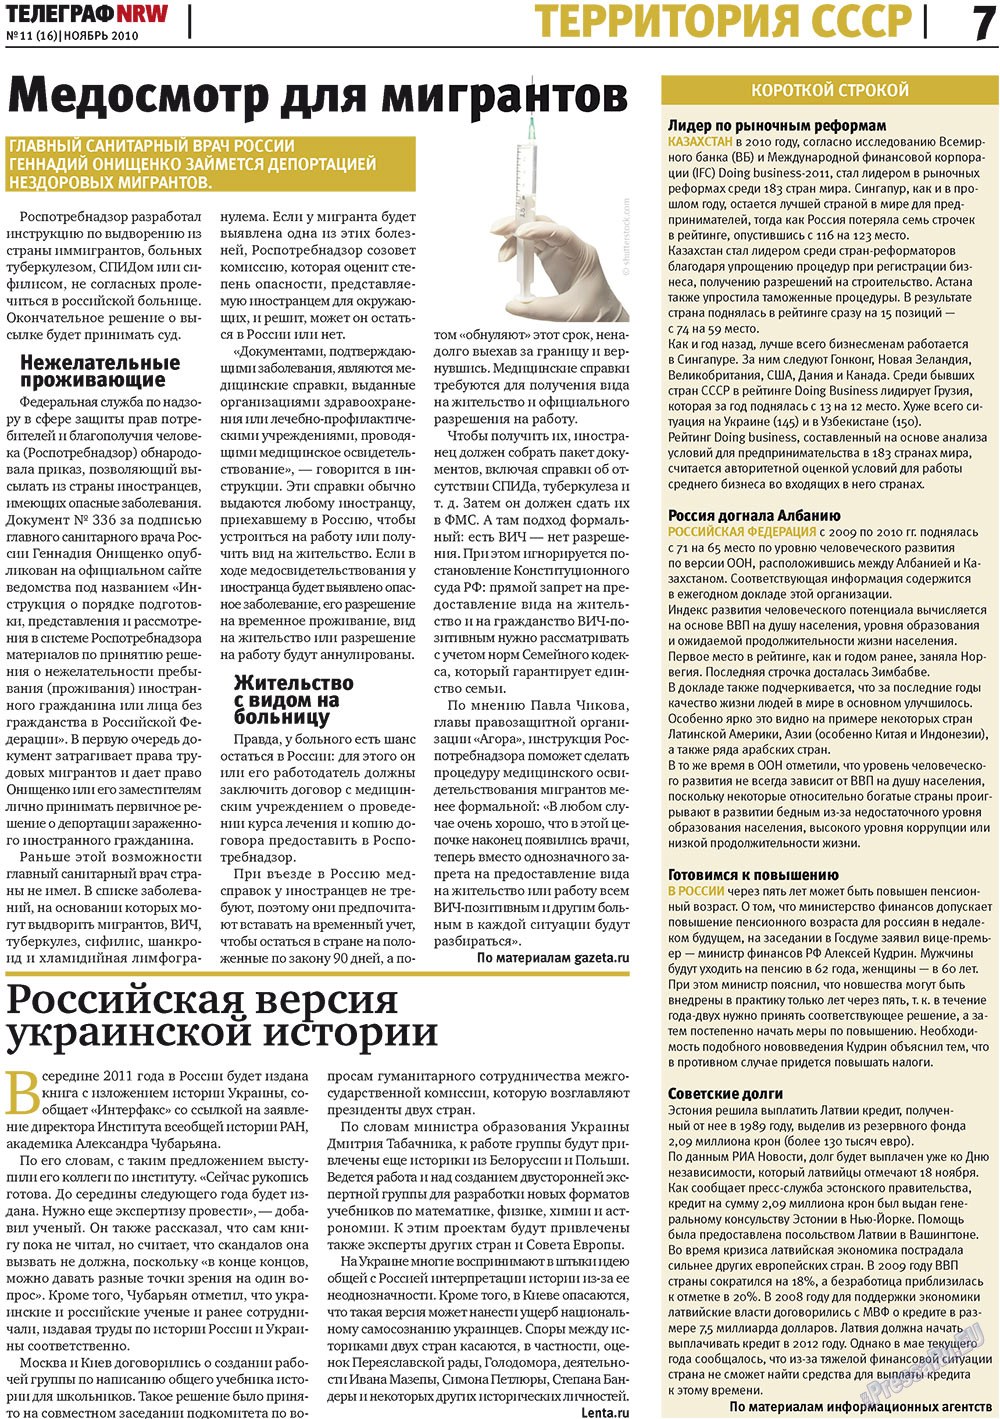 Телеграф NRW, газета. 2010 №11 стр.7